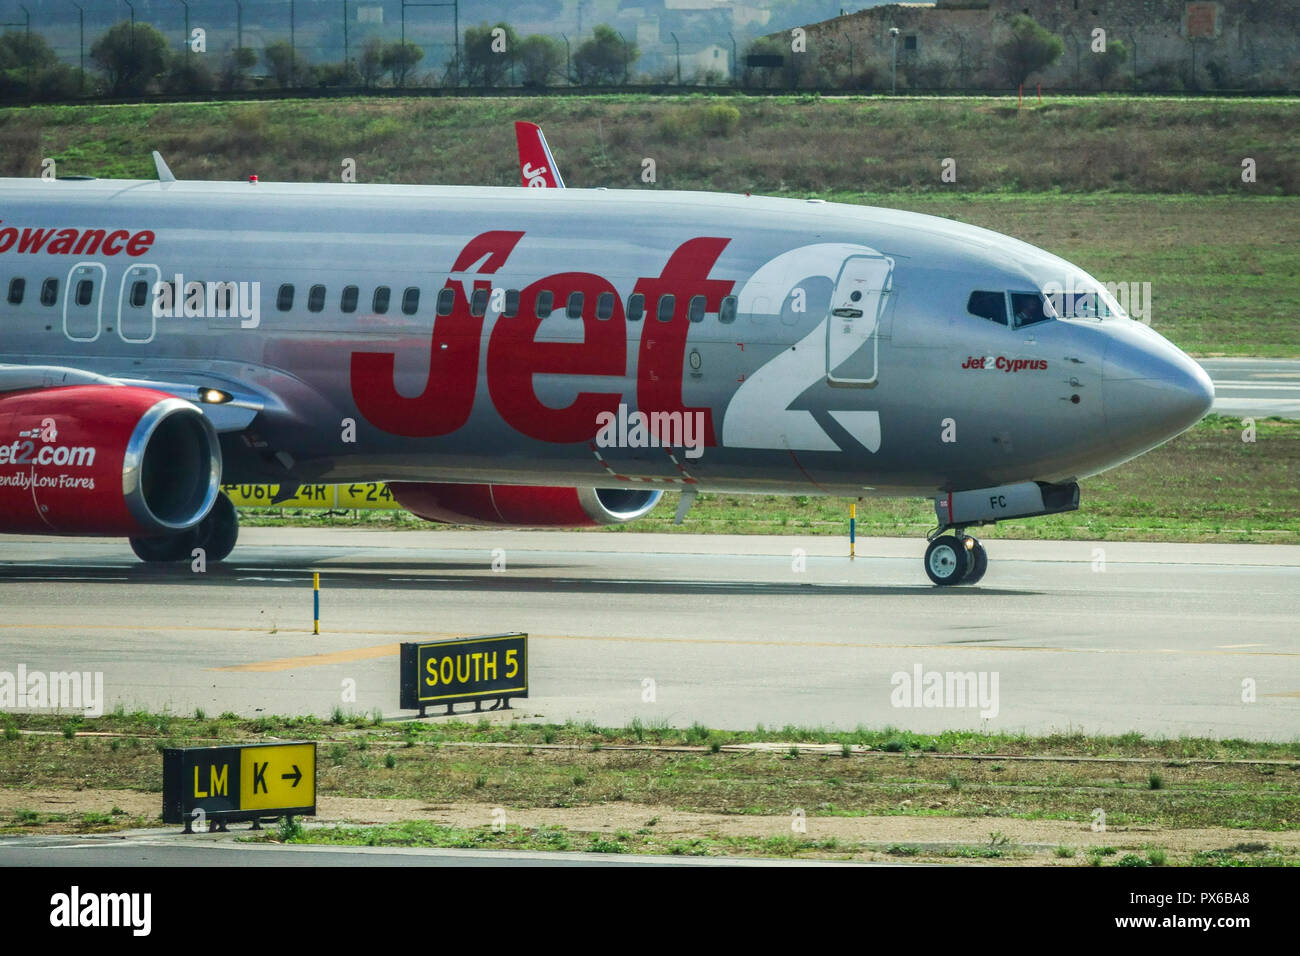 Jet2 Plane on the runway, Palma de Mallorca, Spain Stock Photo